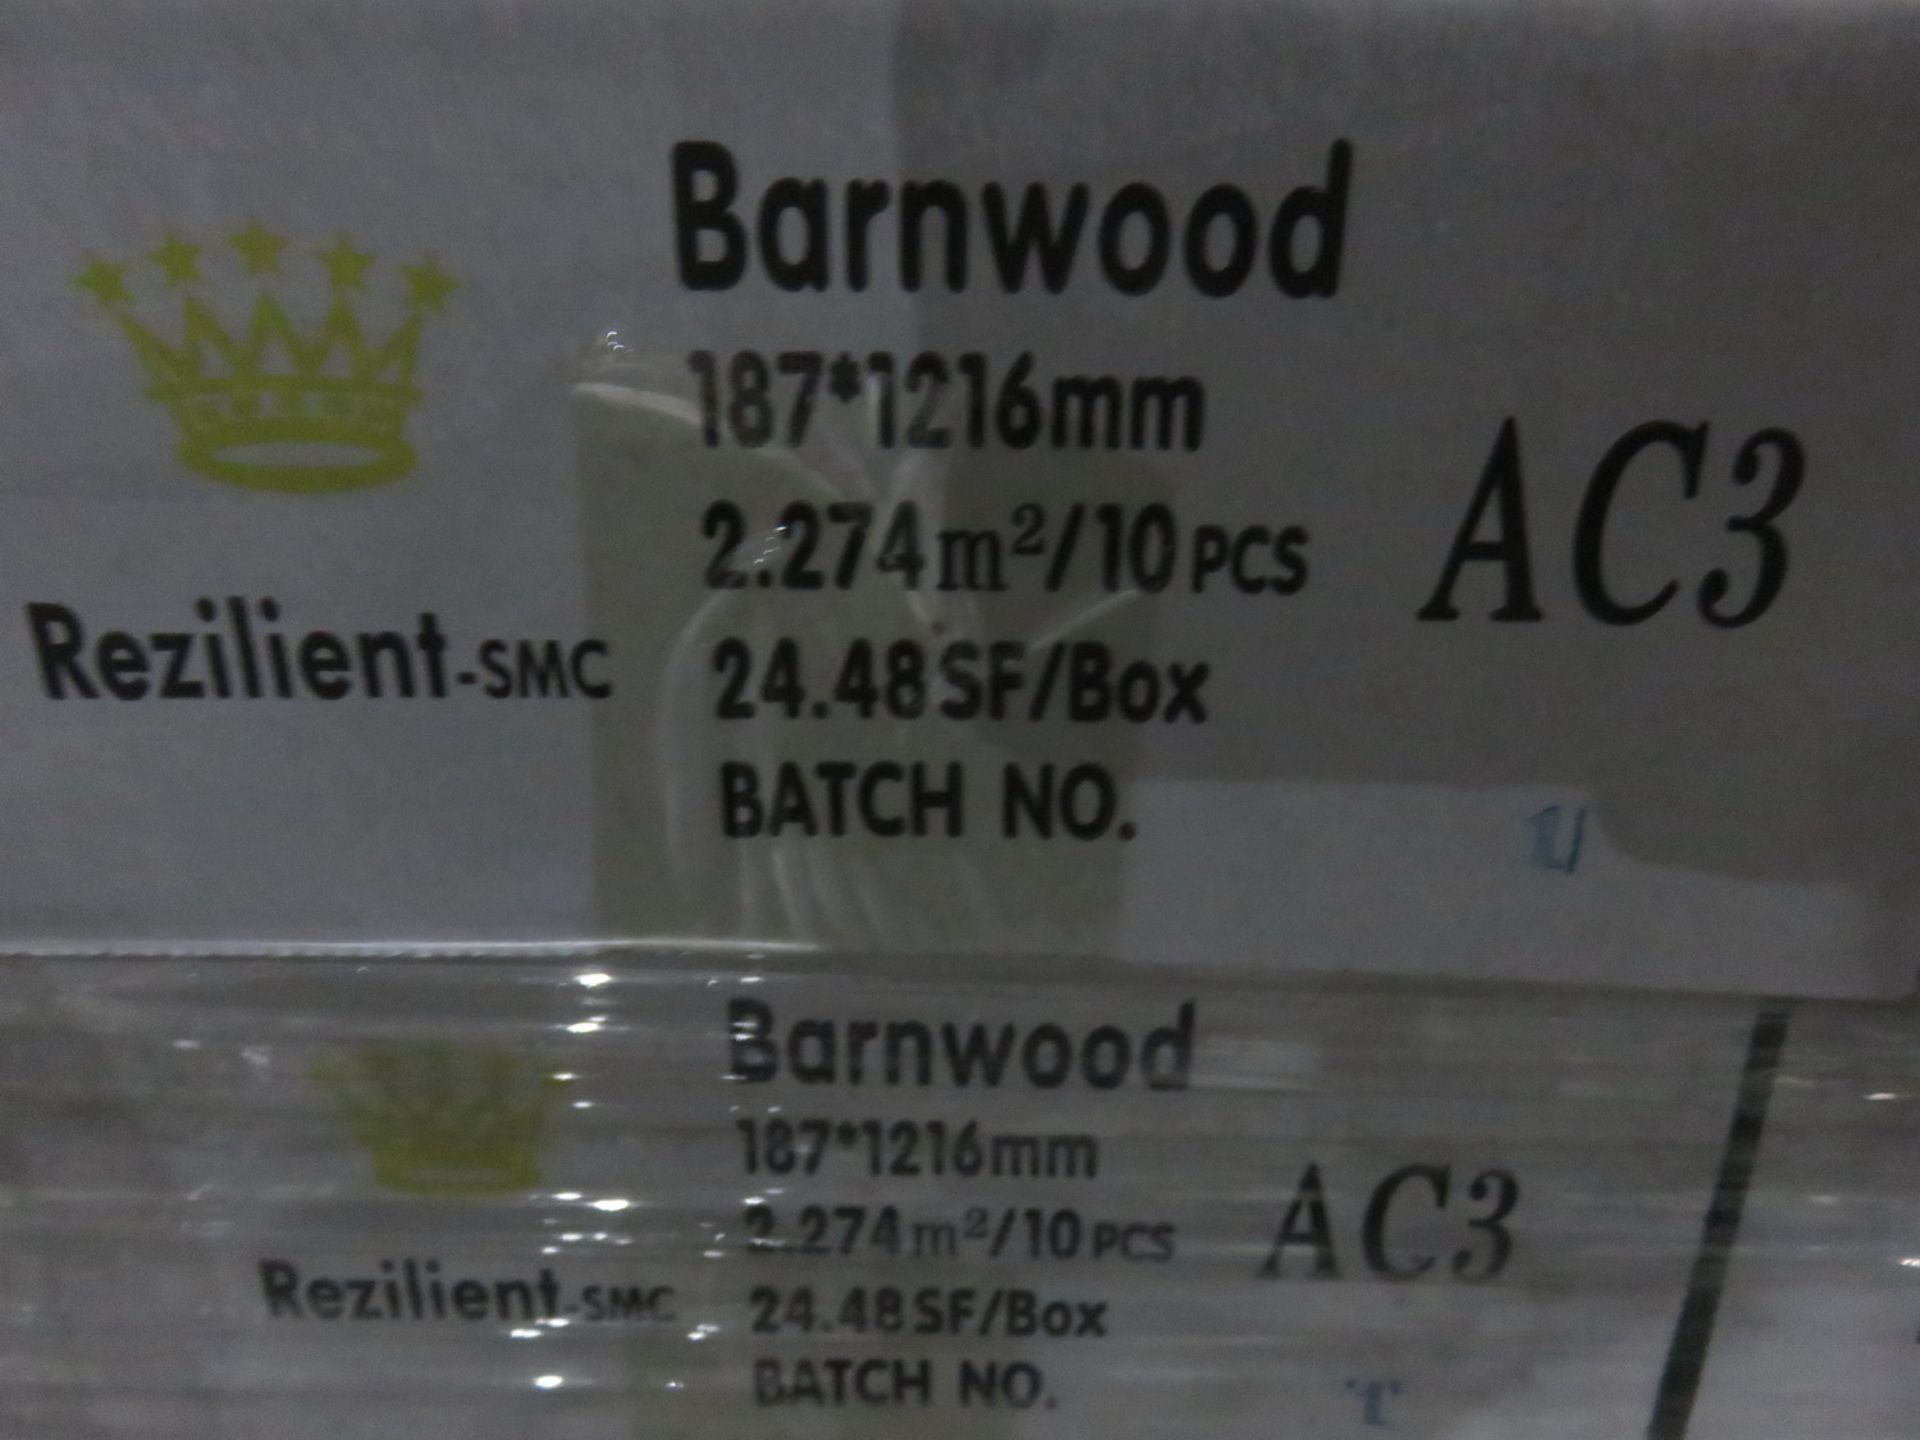 BOXES - REZILIENT SMC BARNWOOD 187 X 1216 X 8MM 100% ORGANIC FLOORING (24.48 SQFT/BOX) - Image 2 of 3